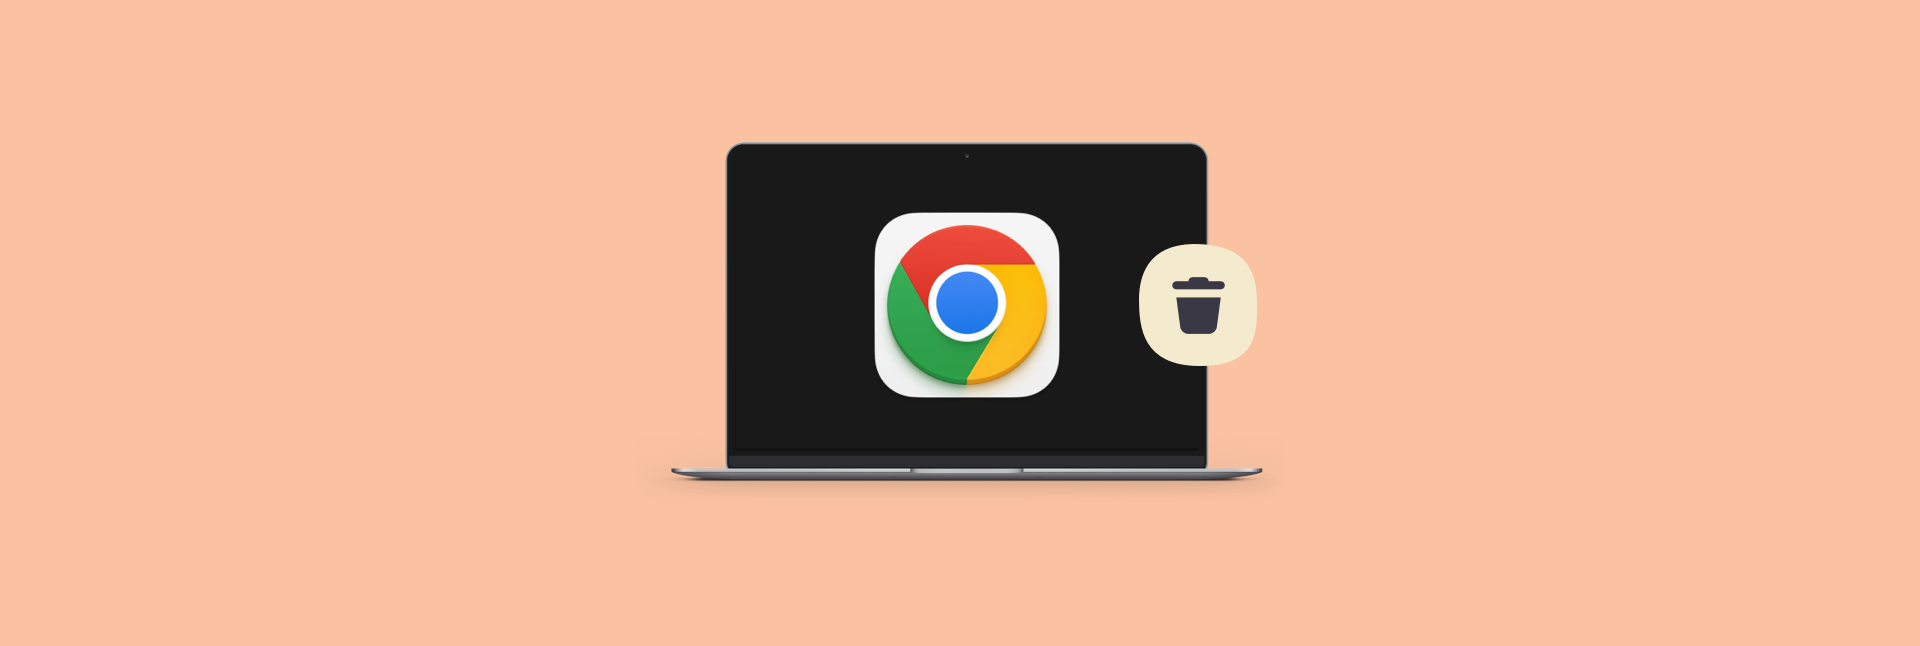 how to wipe google chrome on mac